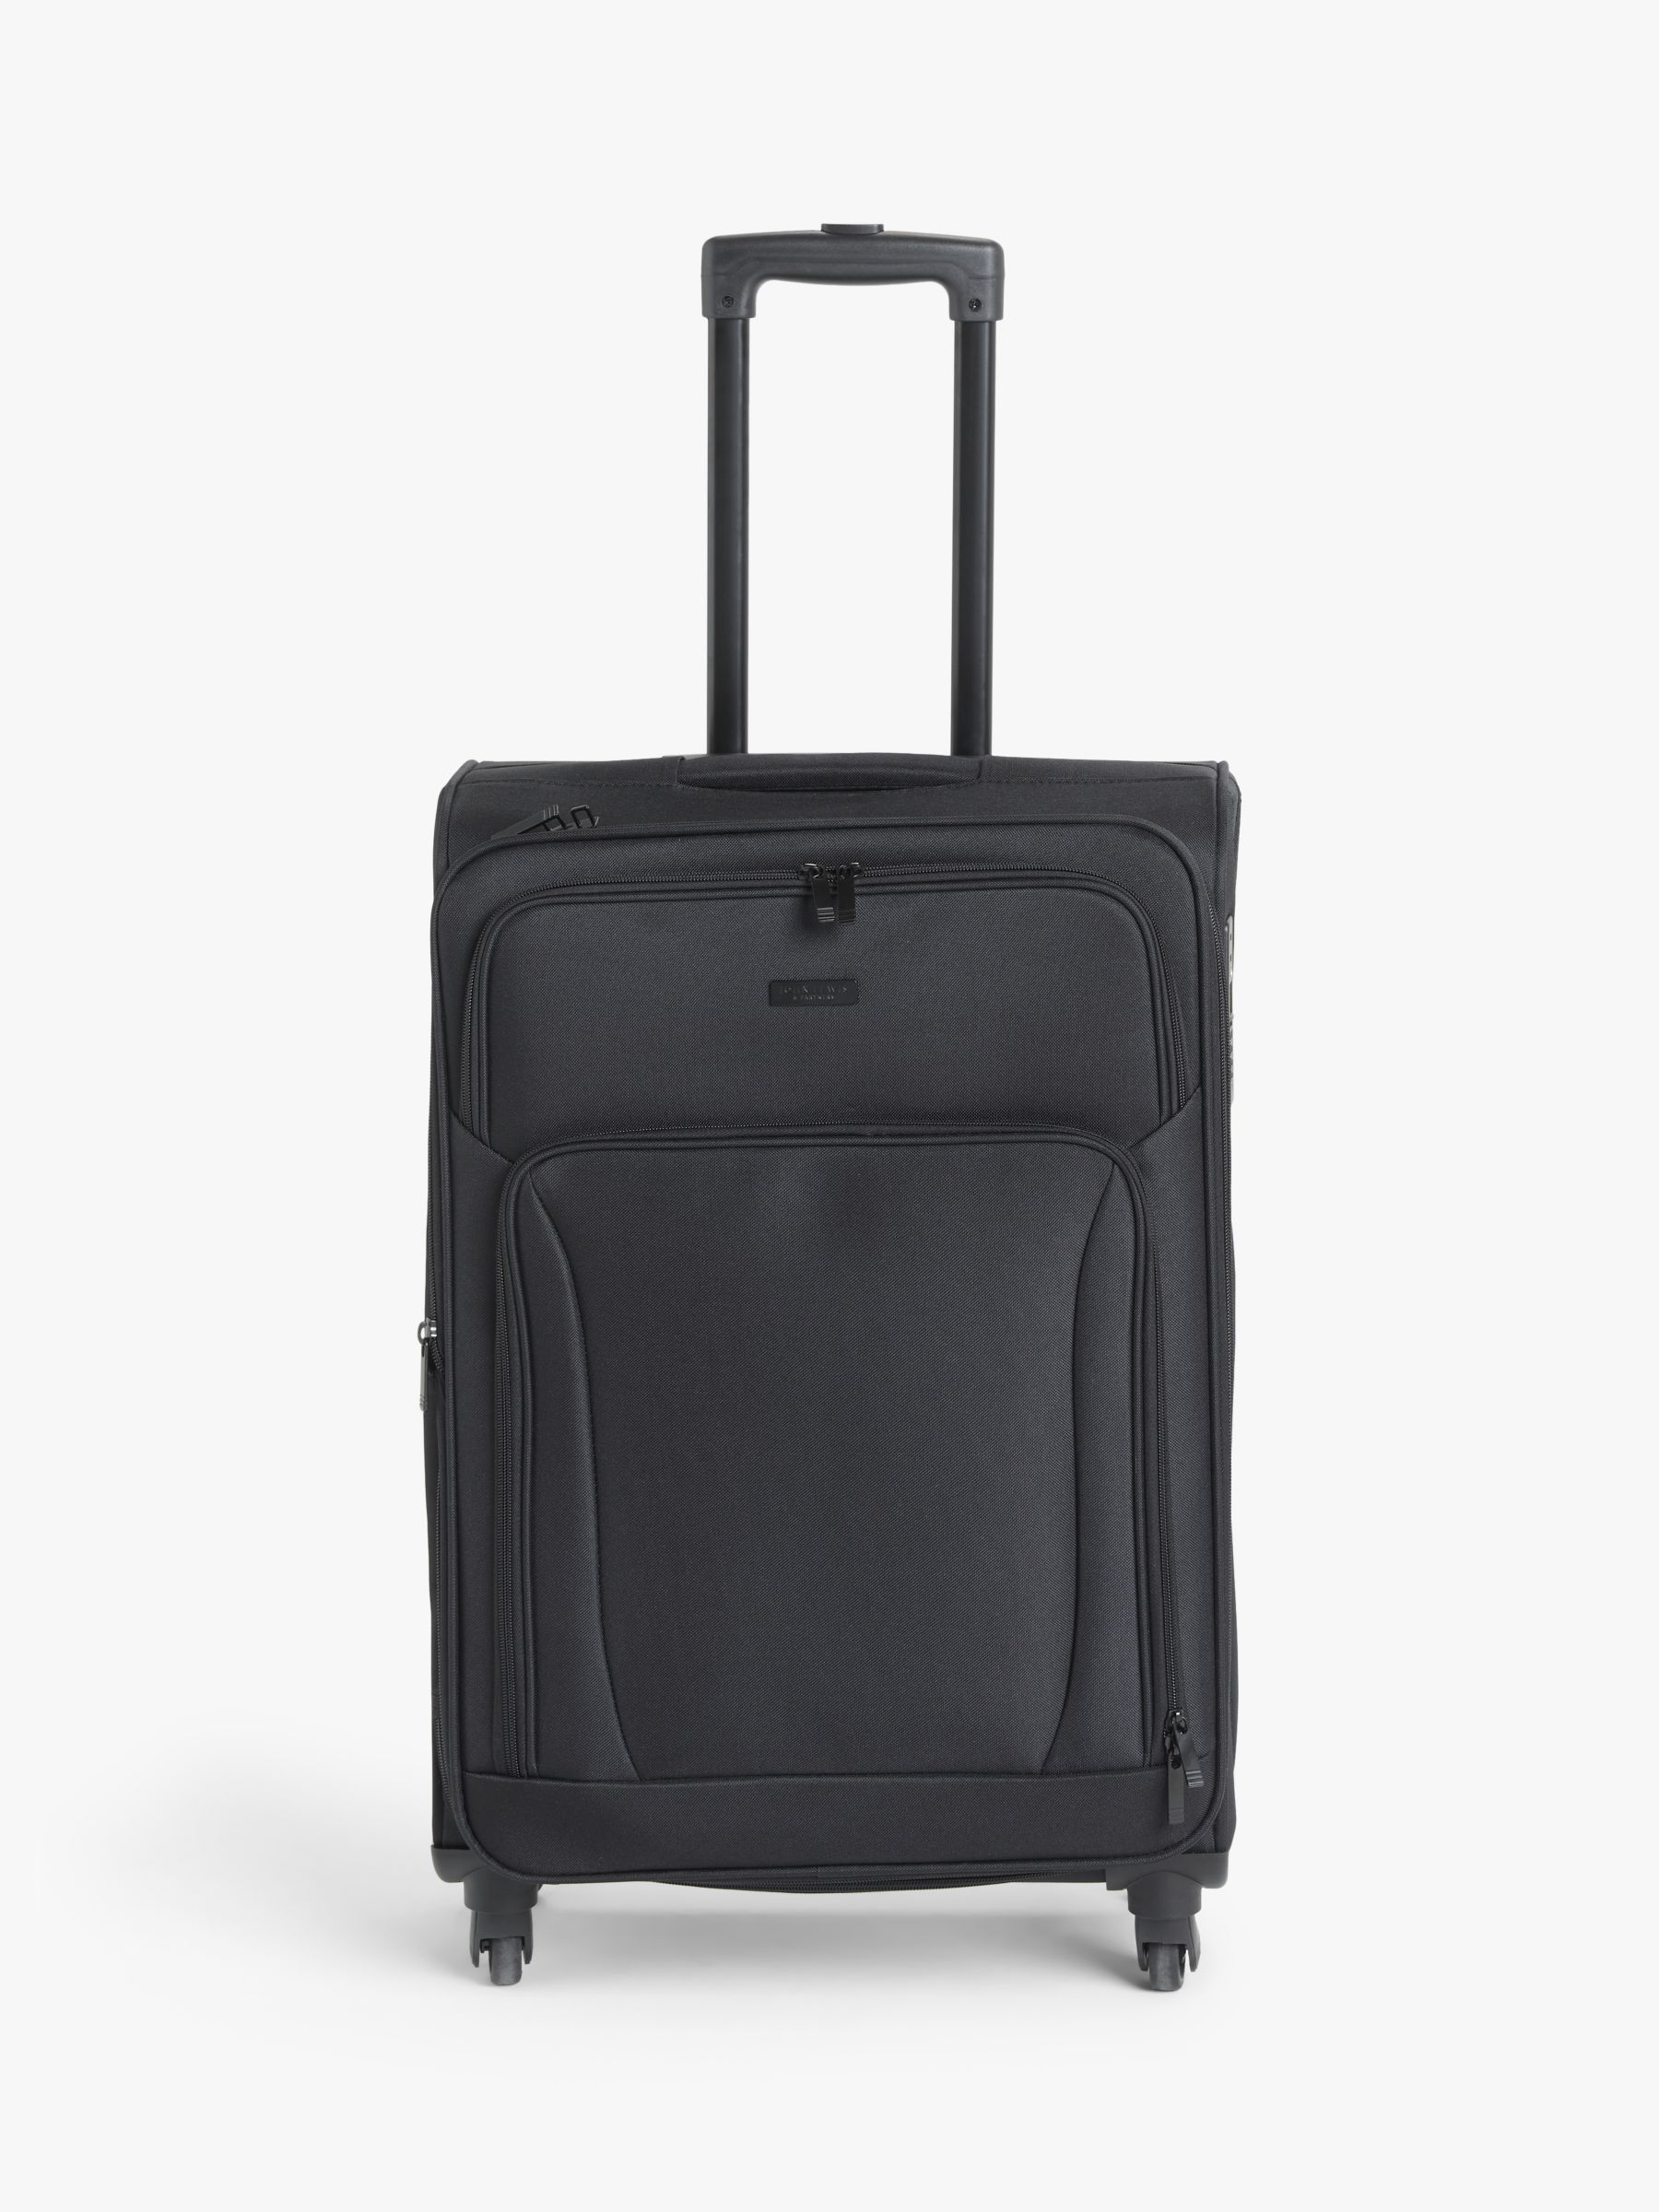 Black Luggage X 66cm 26 Suitcase Medium Lightweight Hard Shell 4